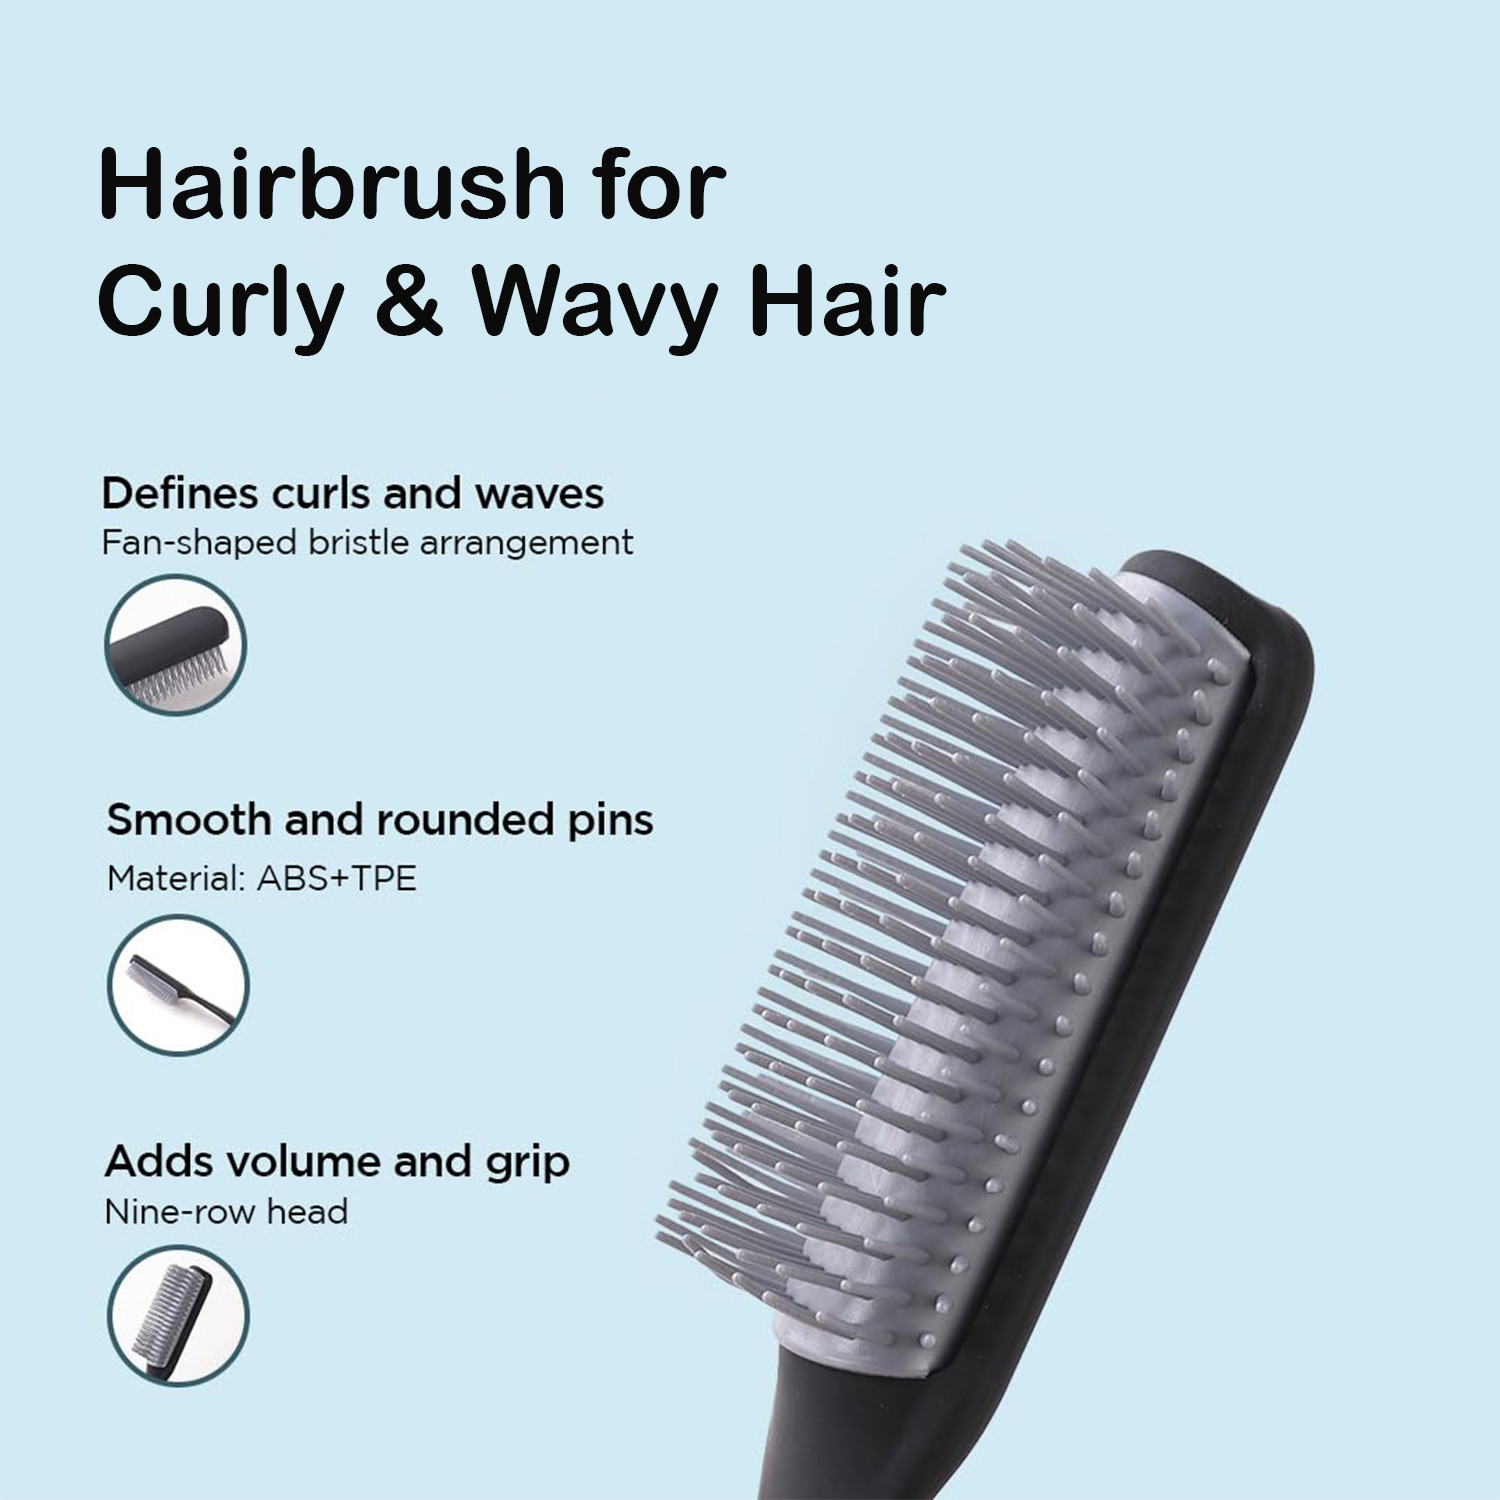 Kuber Industries Hair Brush | Bristles Brush | Hair Brush with Paddle | Sharp Hair Brush for Woman | Suitable For All Hair Types | TGX5232-C19P.. | Ice Blue & Purple